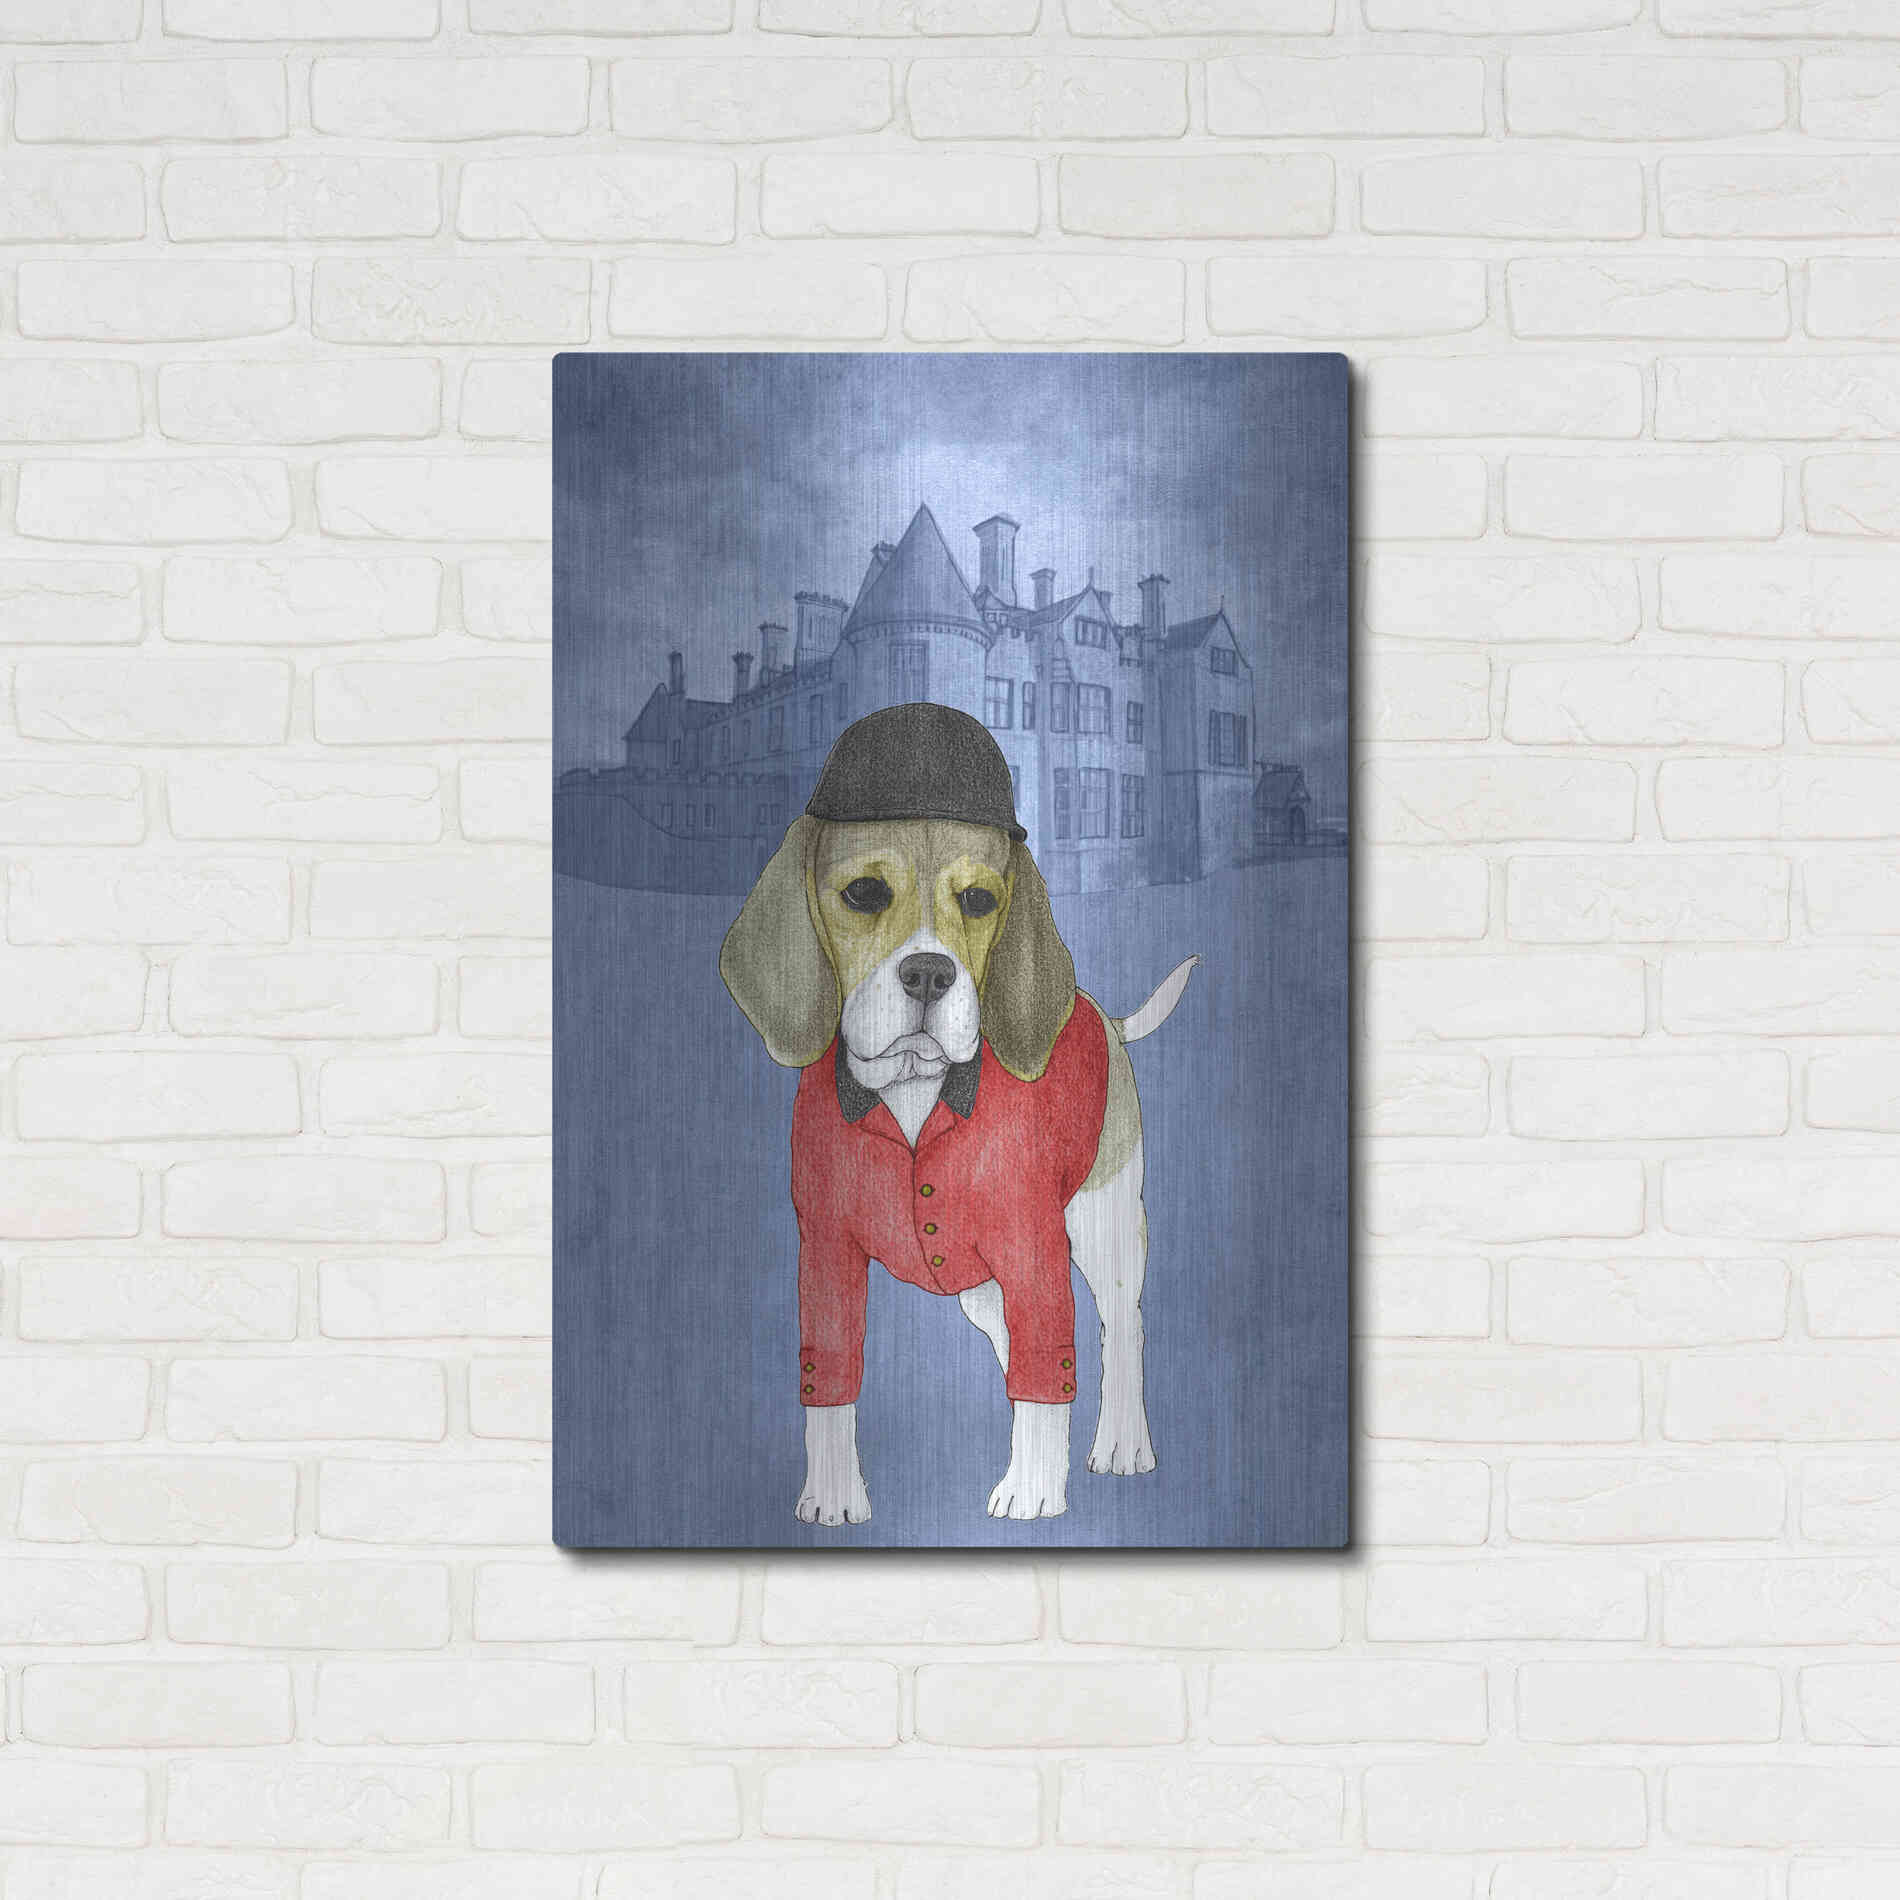 Luxe Metal Art 'Beagle with Beaulieu Palace' by Barruf Metal Wall Art,24x36